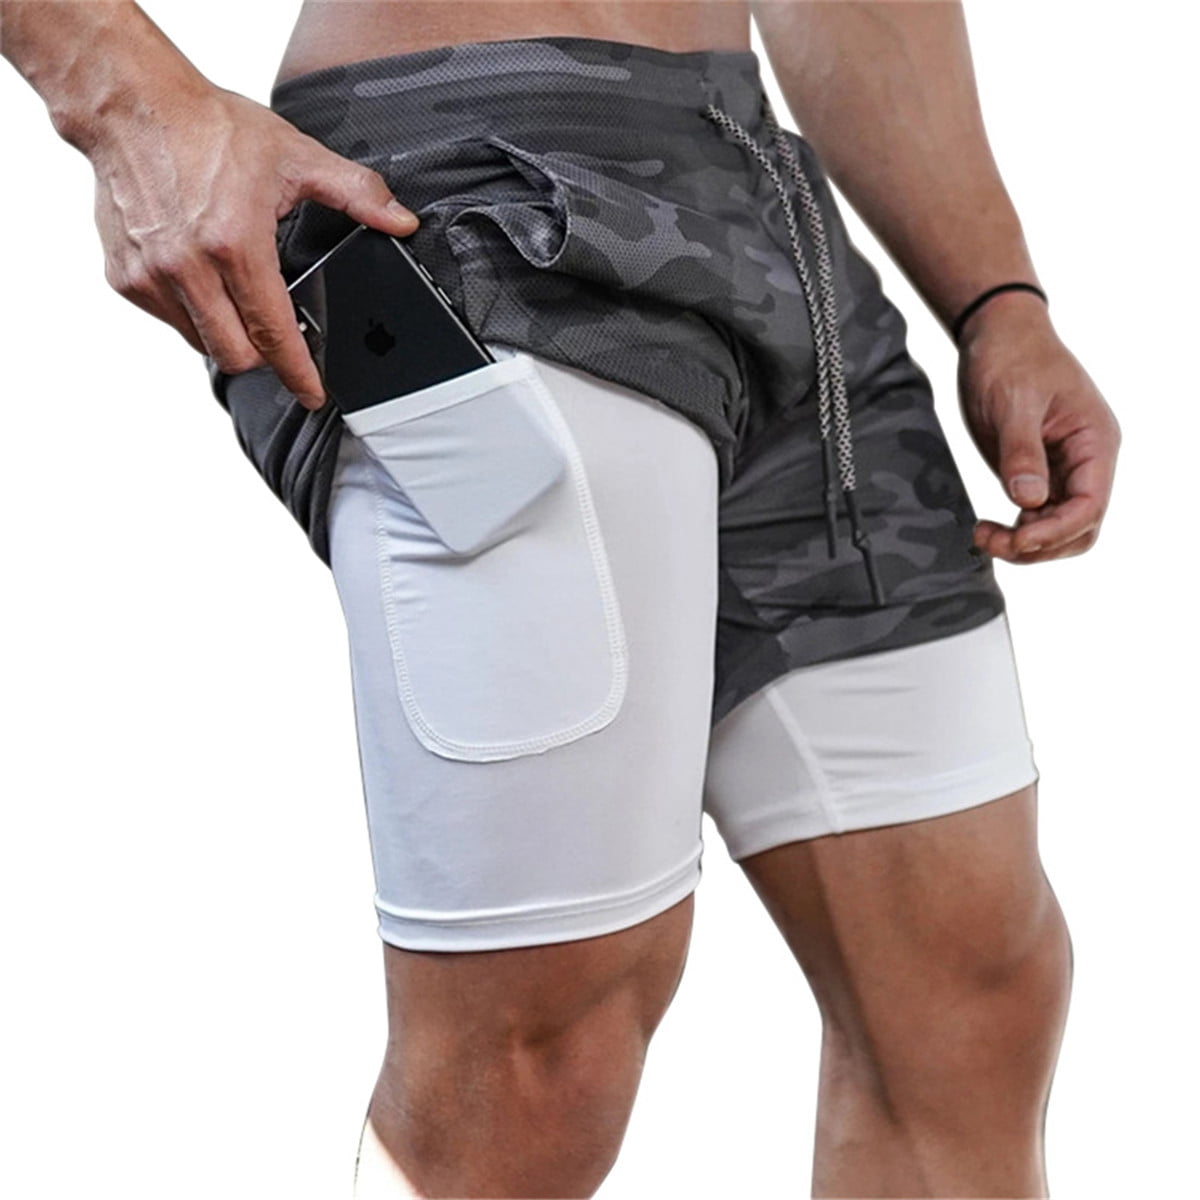 men's short tights with pockets